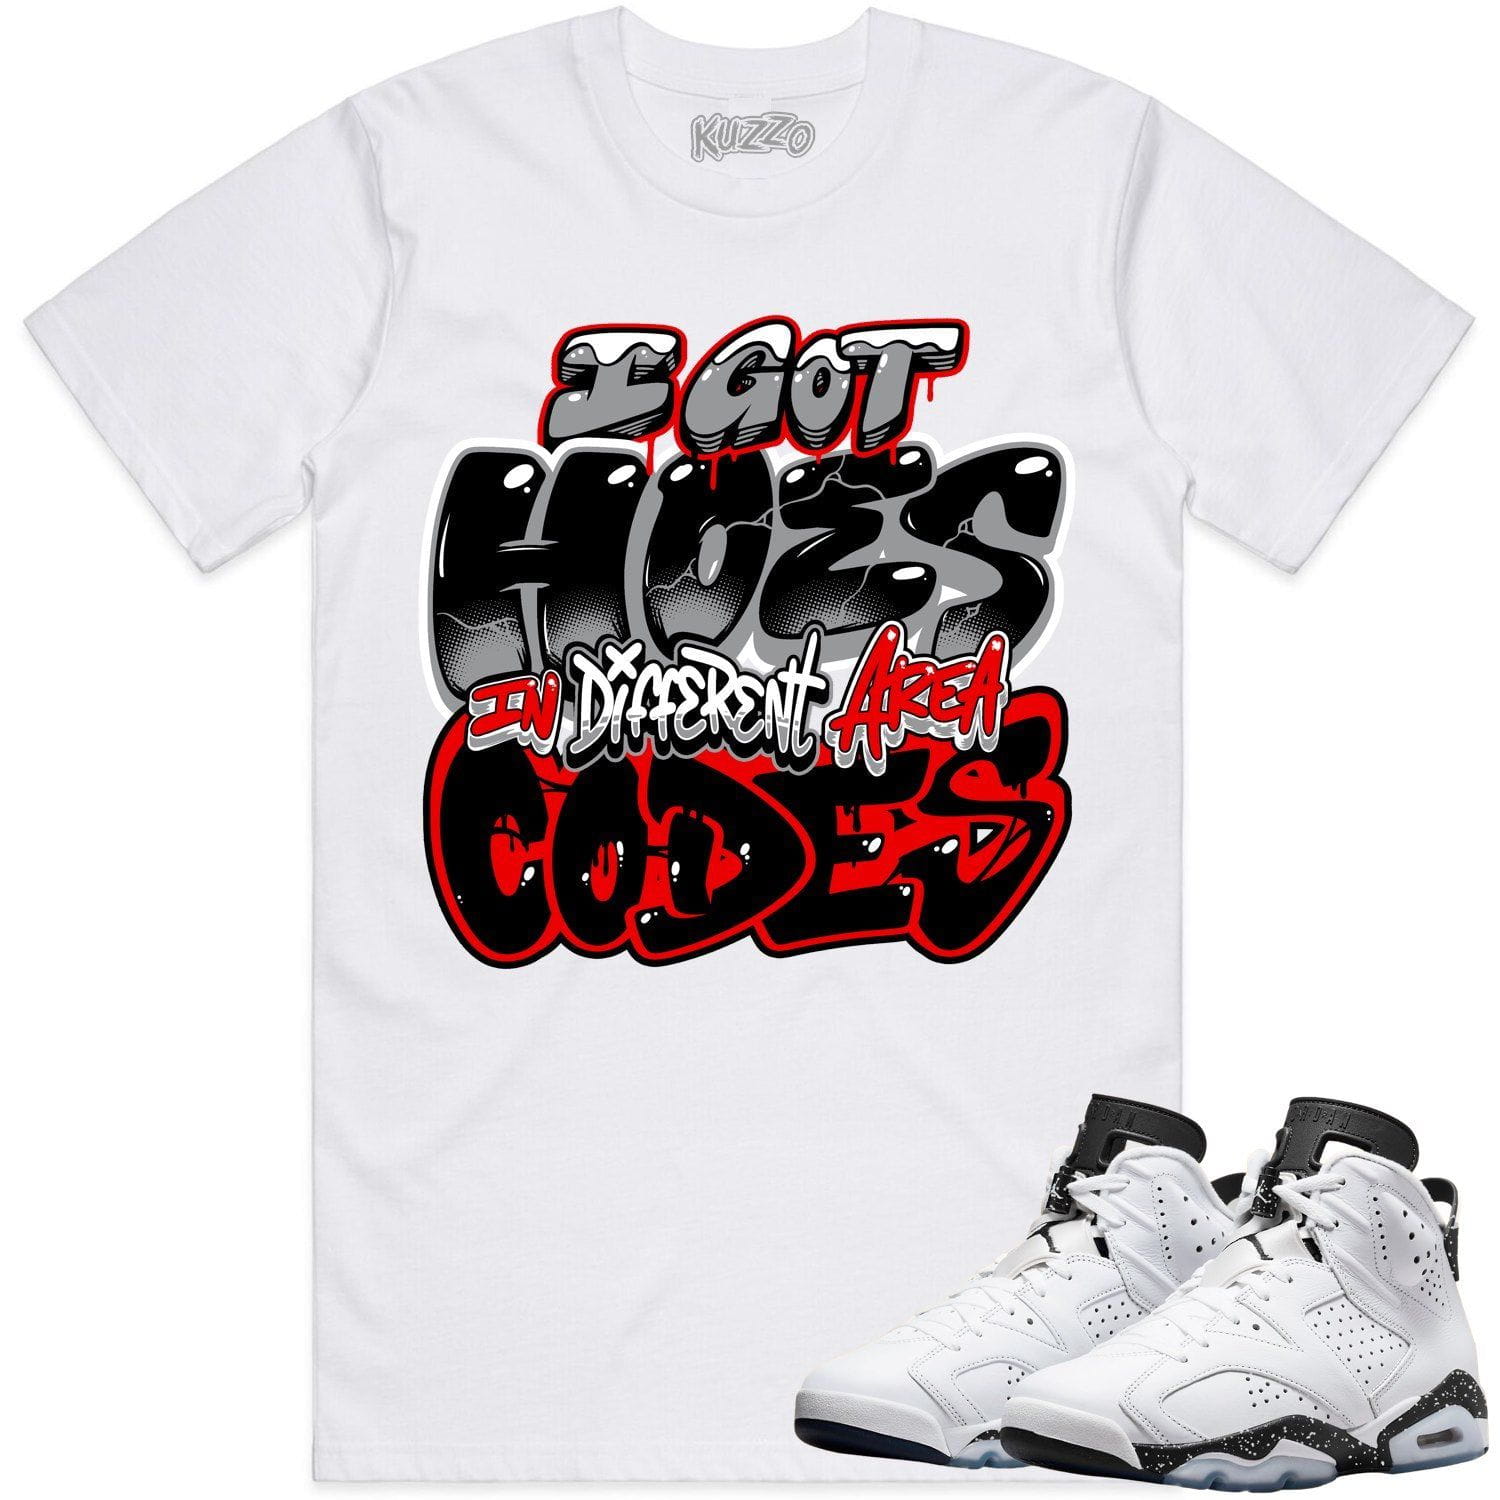 Oreo 6s Shirts - Jordan 6 Reverse Oreo 6s Sneaker Tees - Area Codes